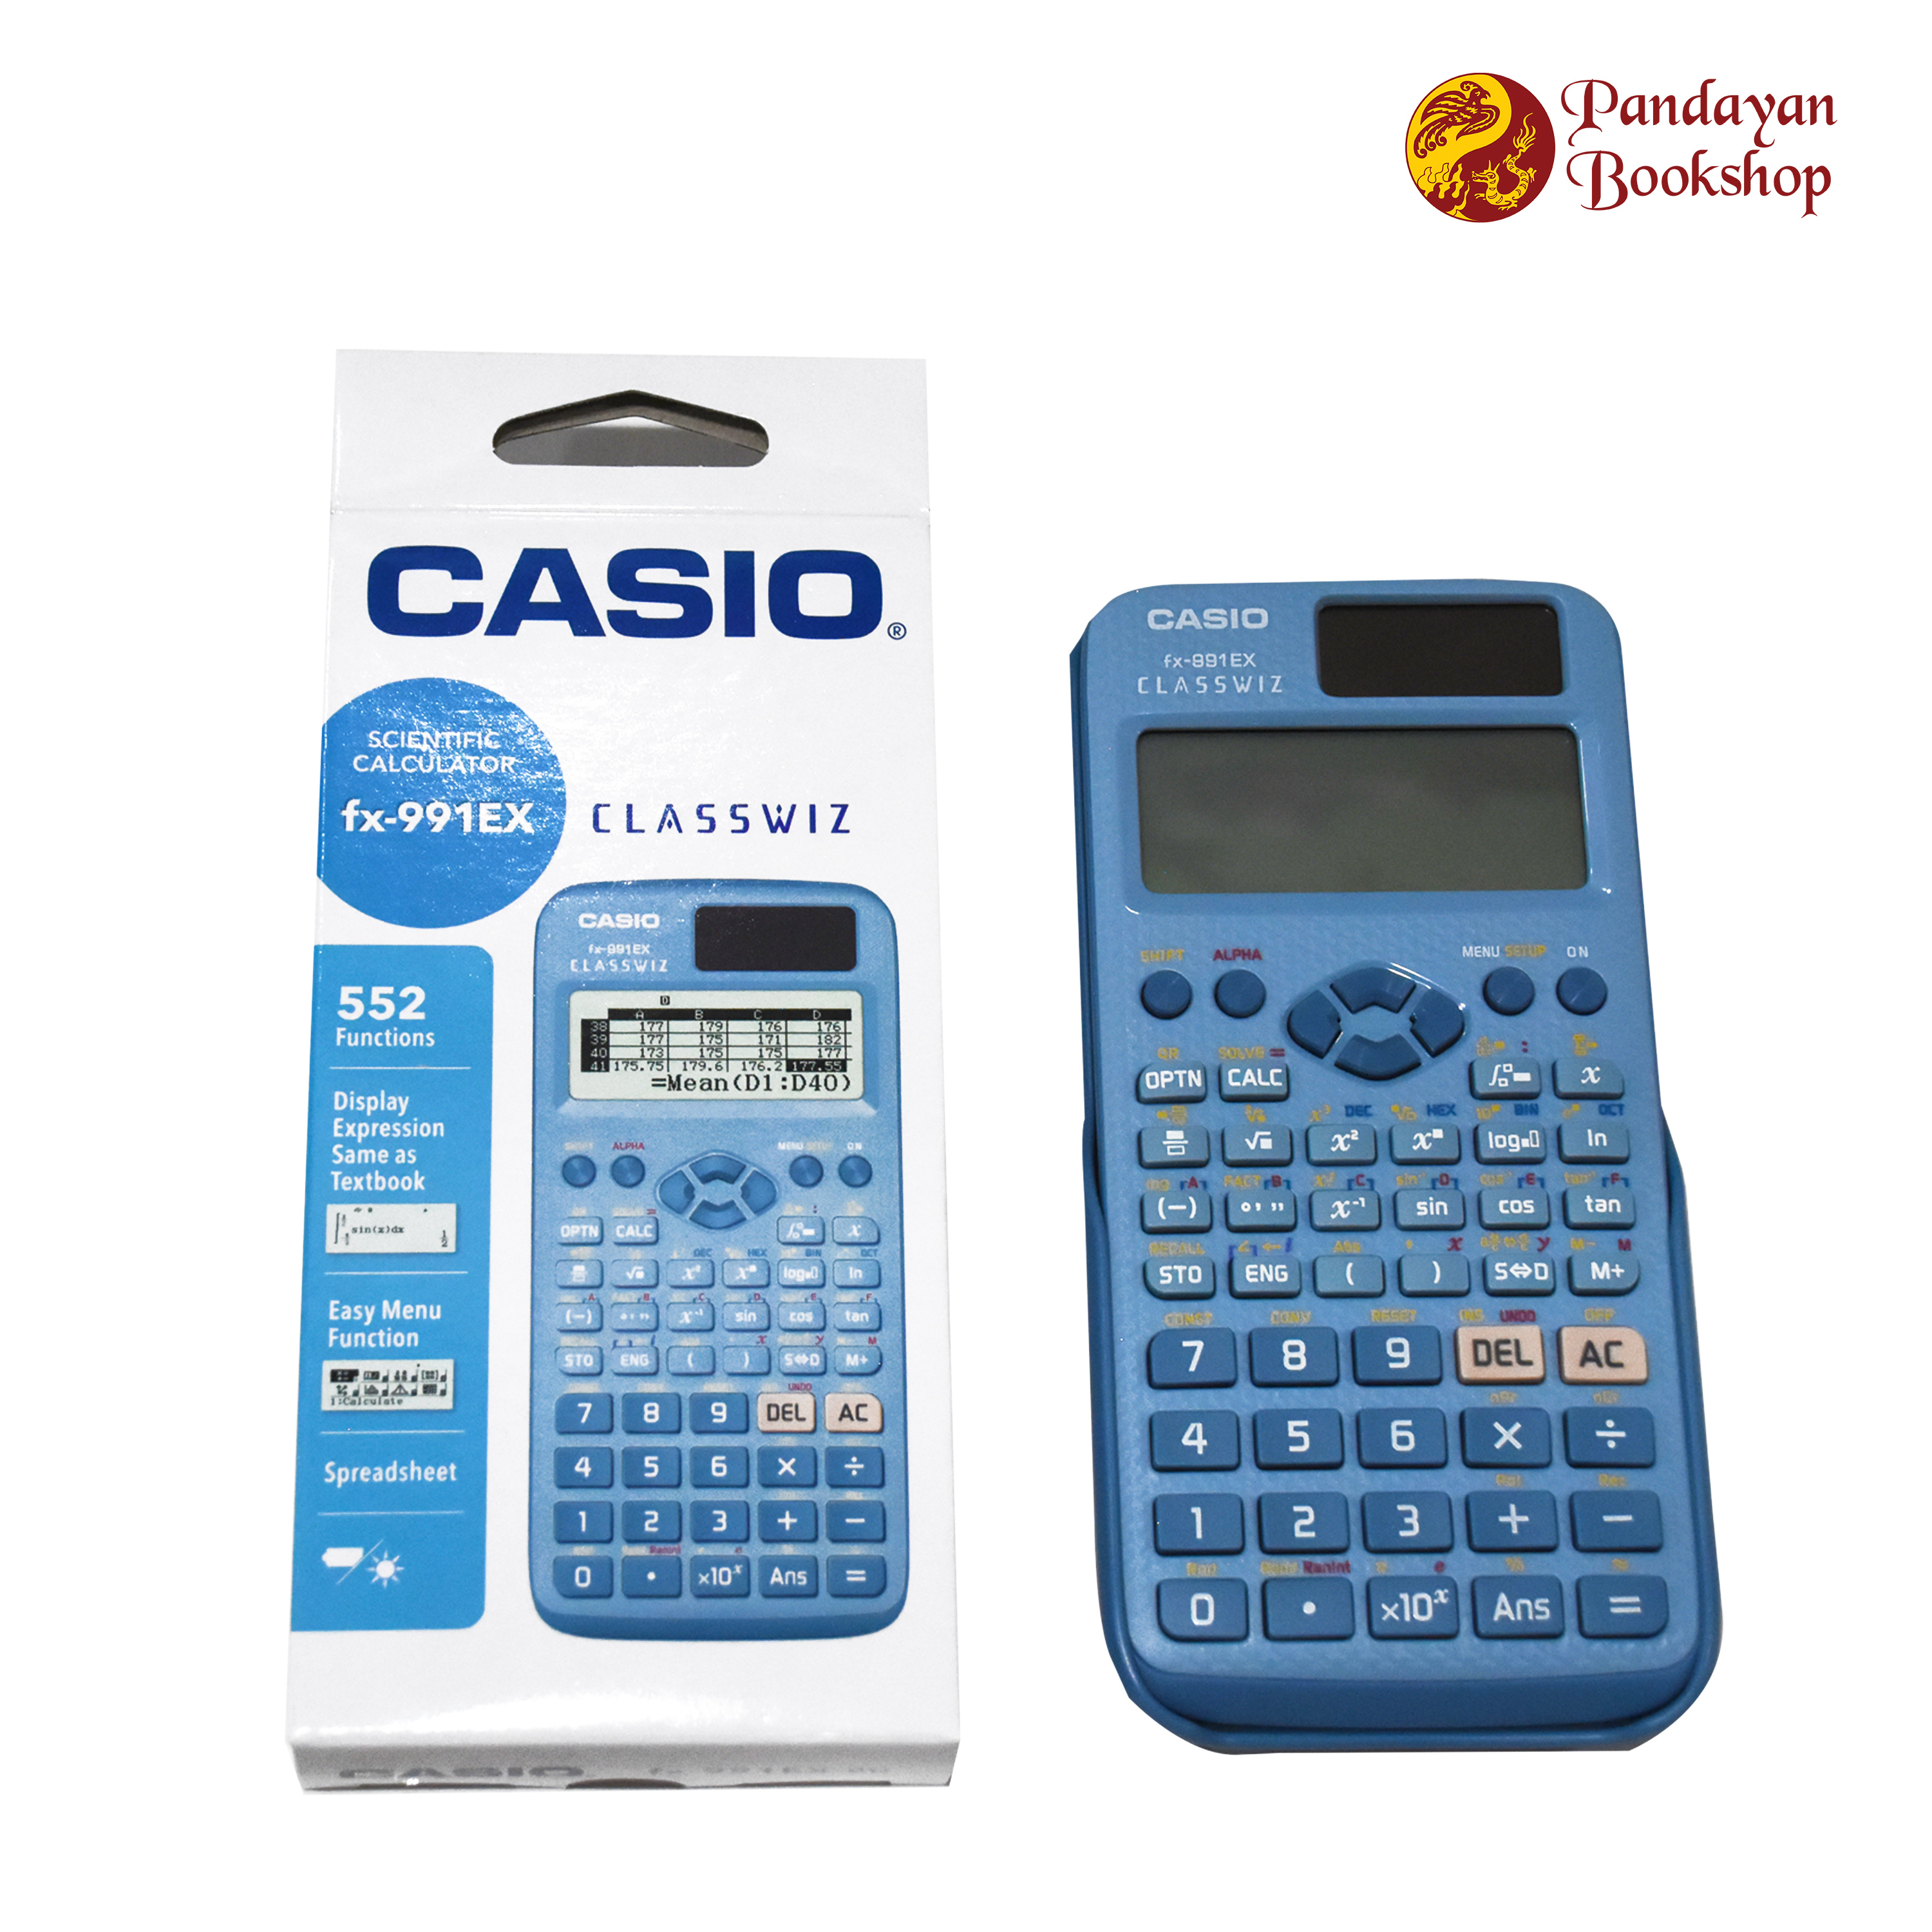 Casio Classwiz FX-991EX-BU Scientific Calculator